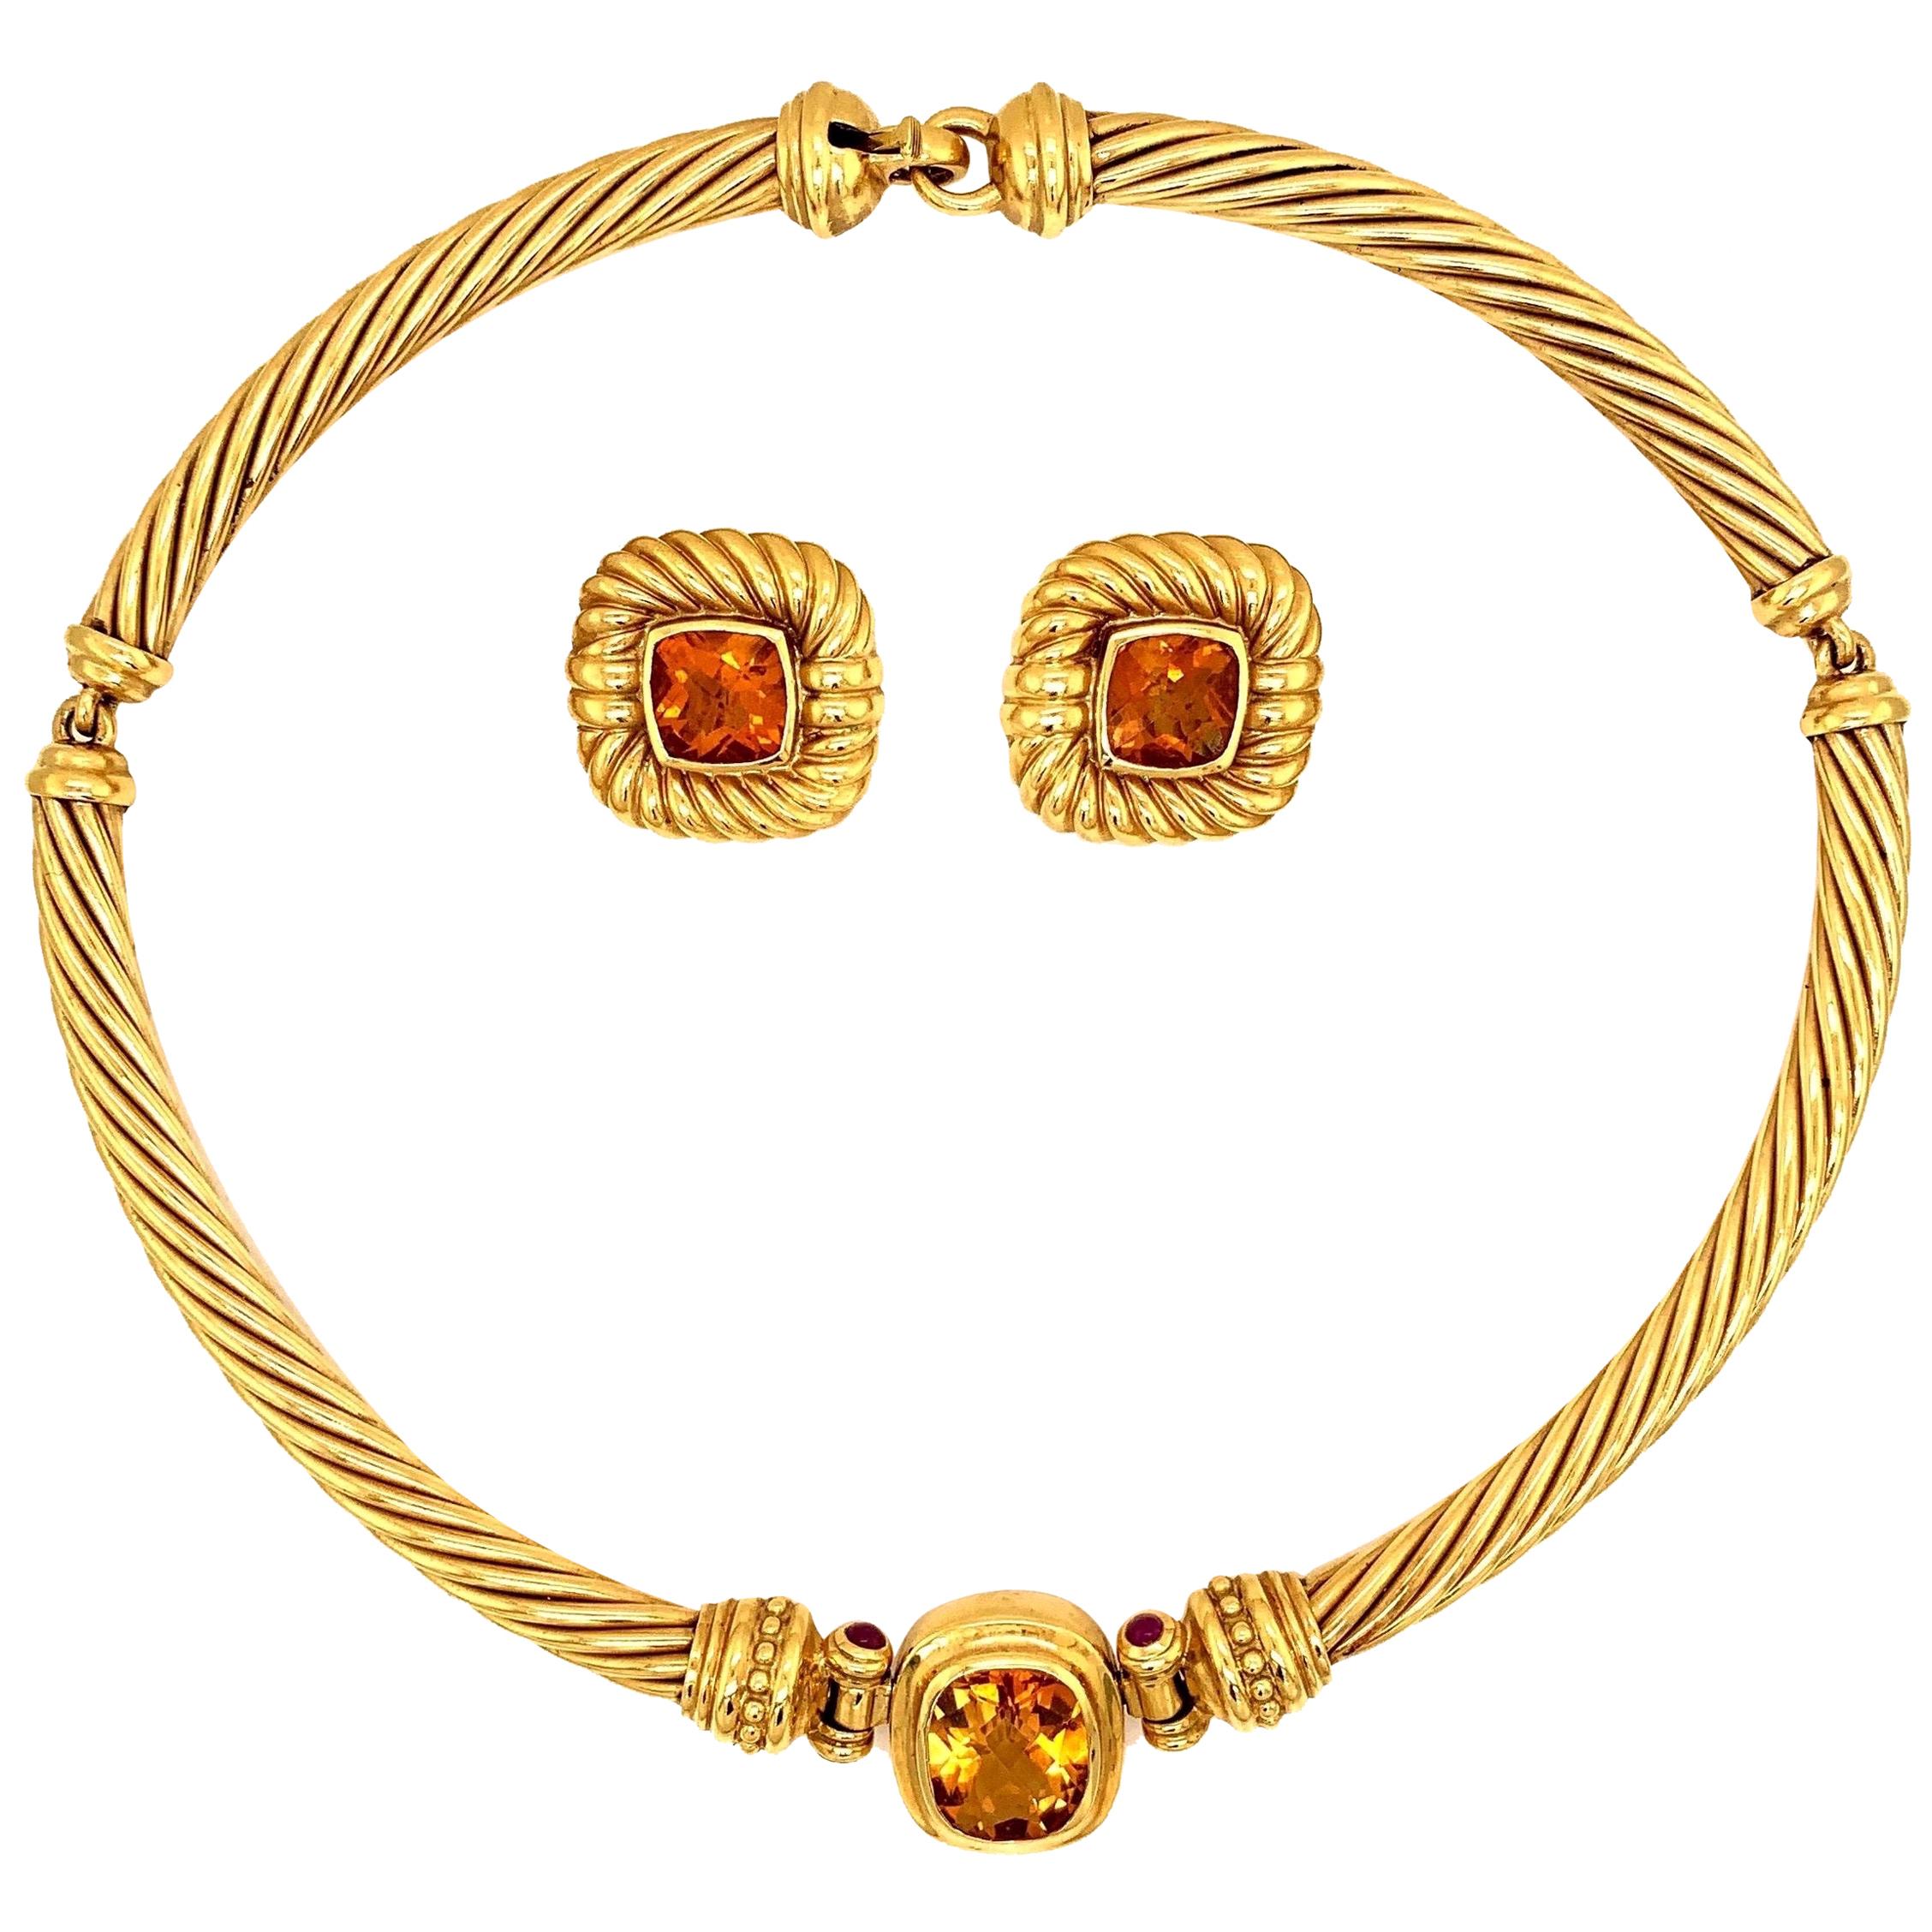 David Yurman 18 Karat Yellow Gold Citrine Choker Necklace and Earrings